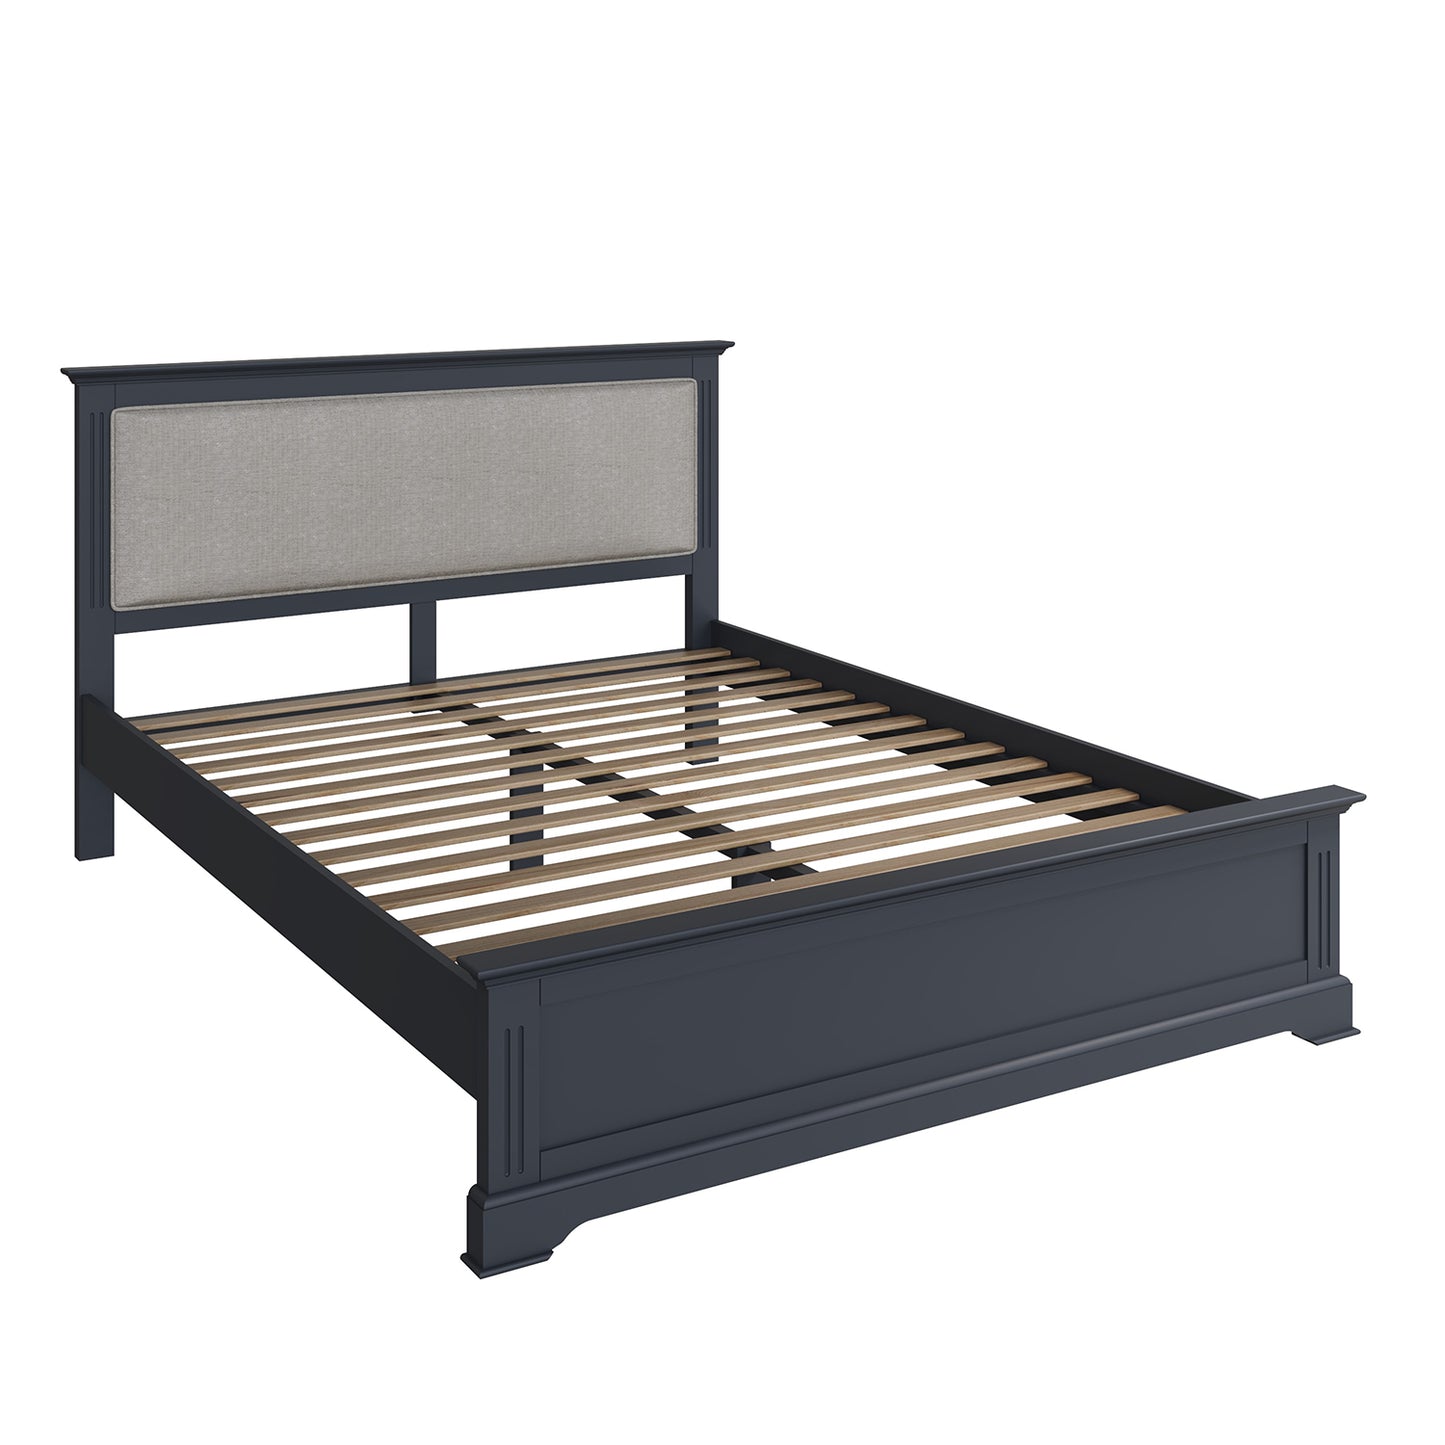 Billingford Charcoal Bed - 5ft